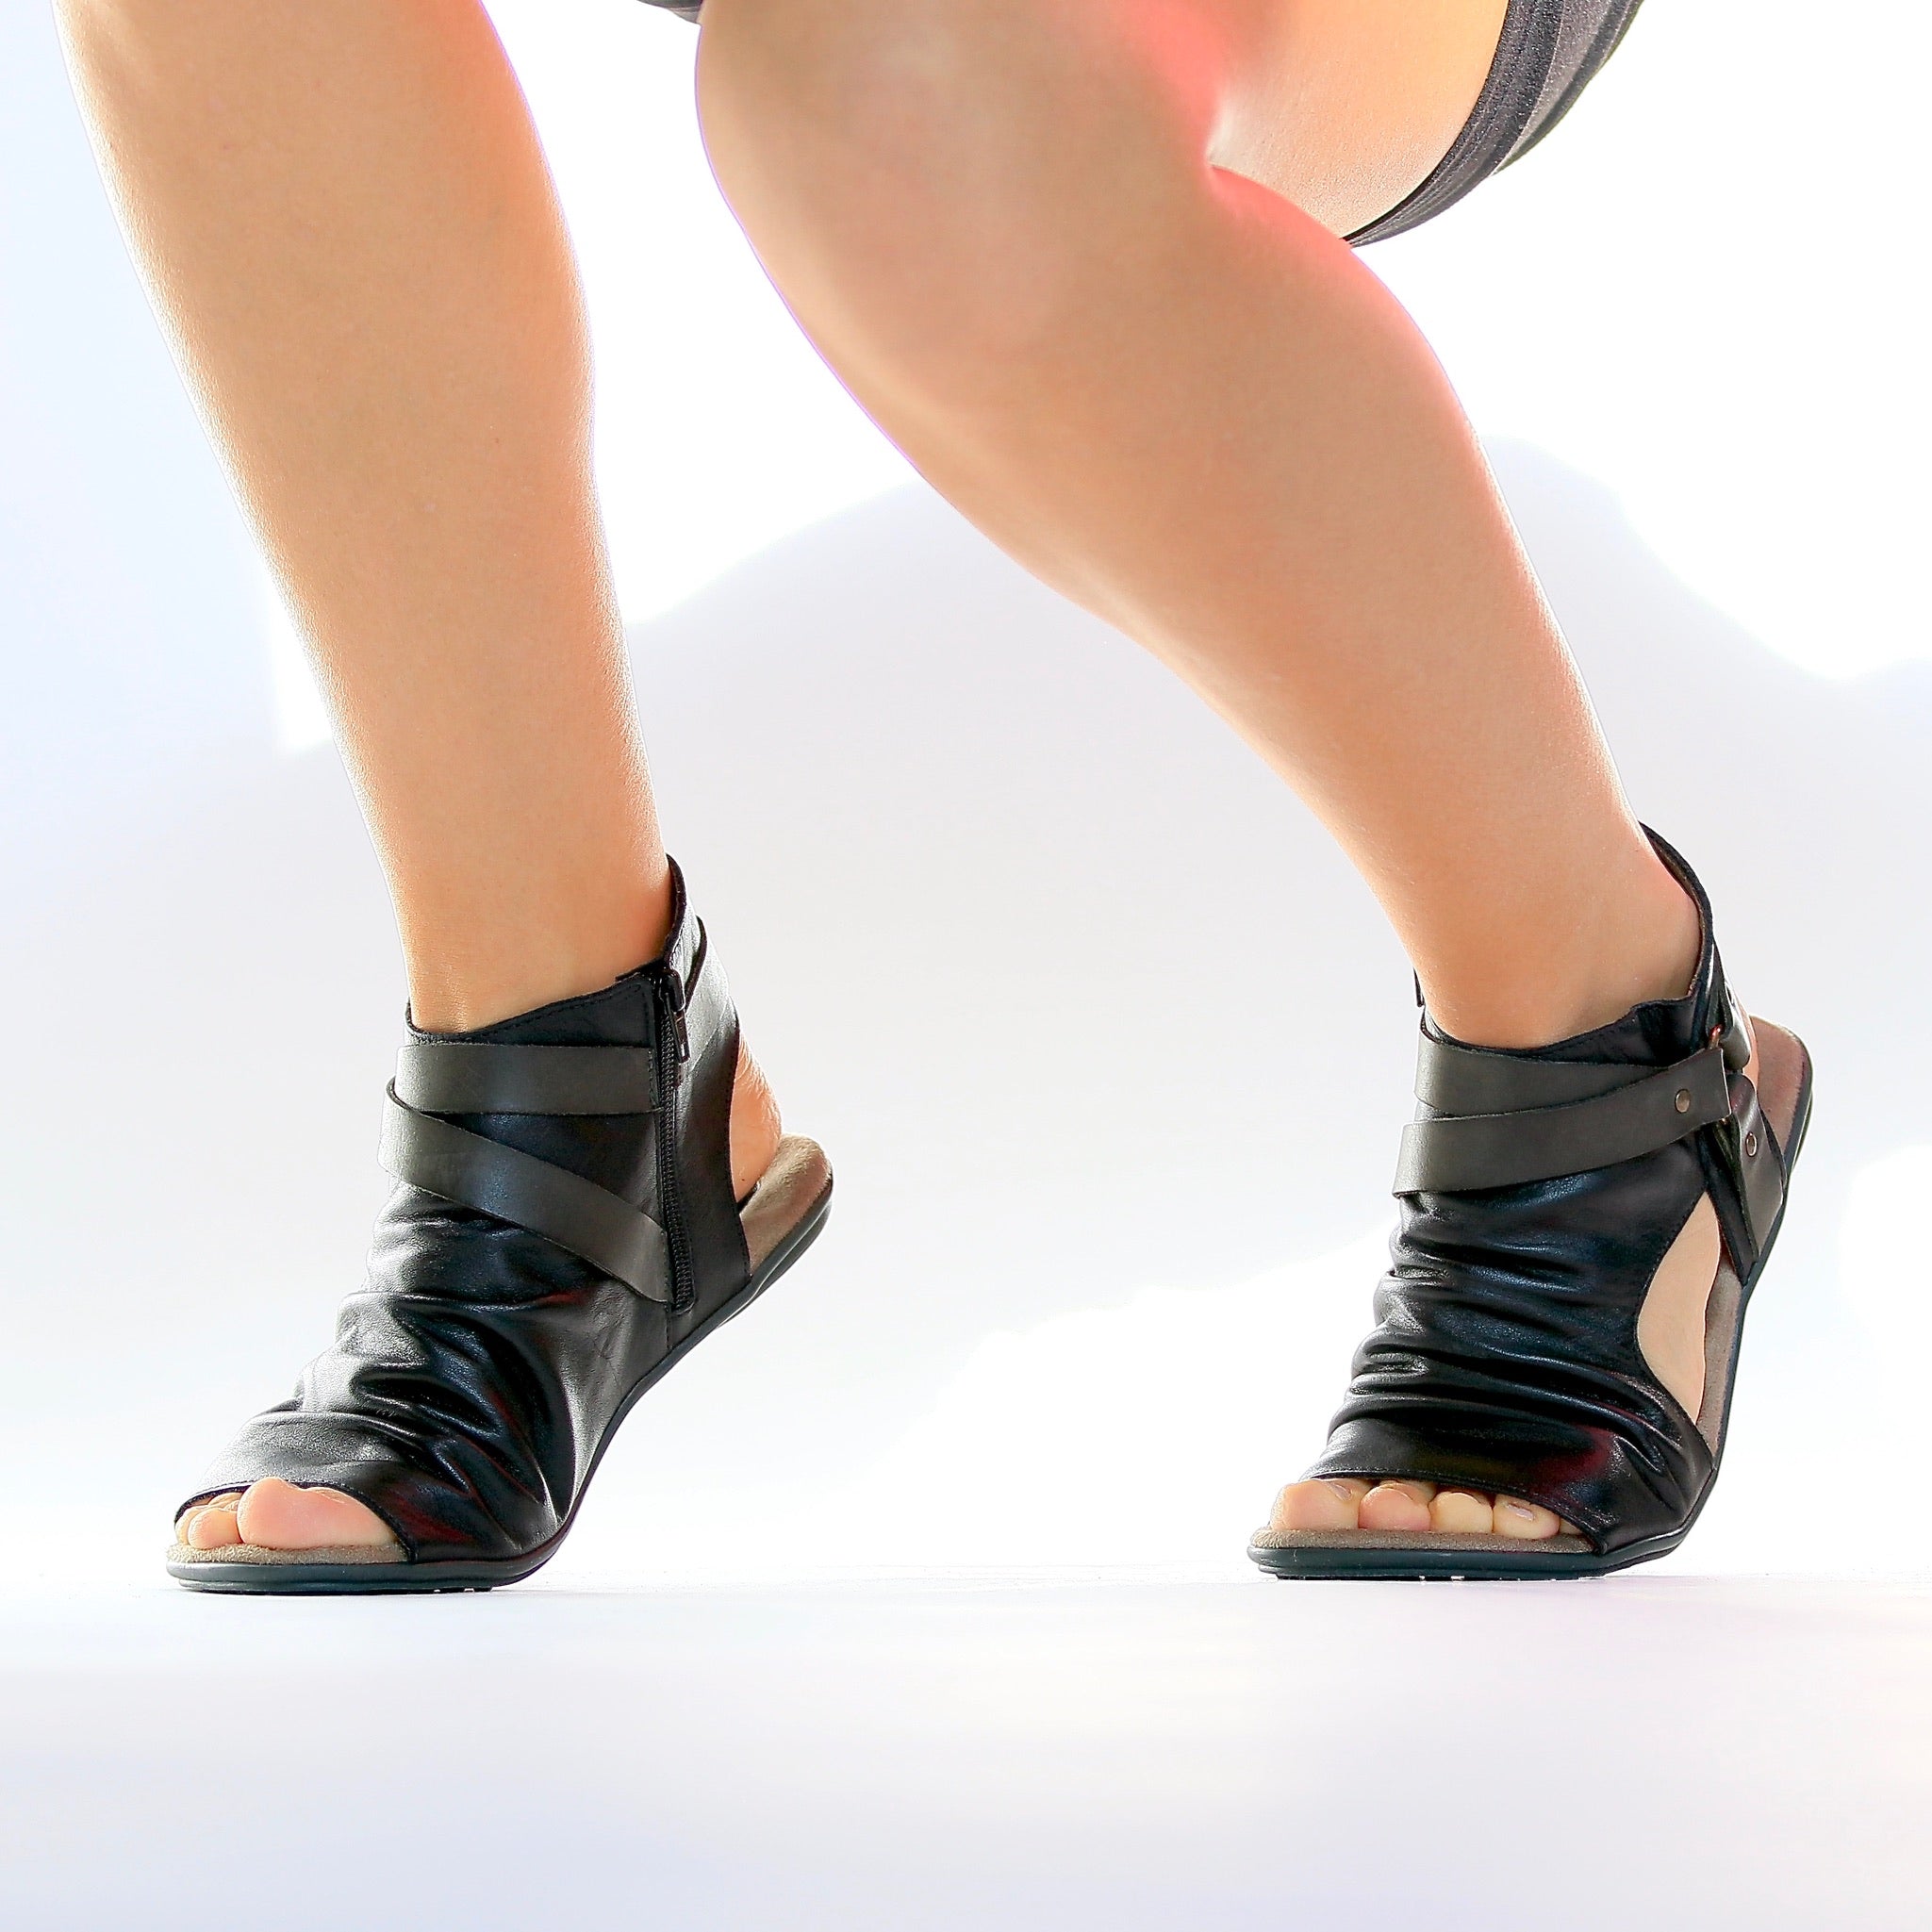 black sandal shoes